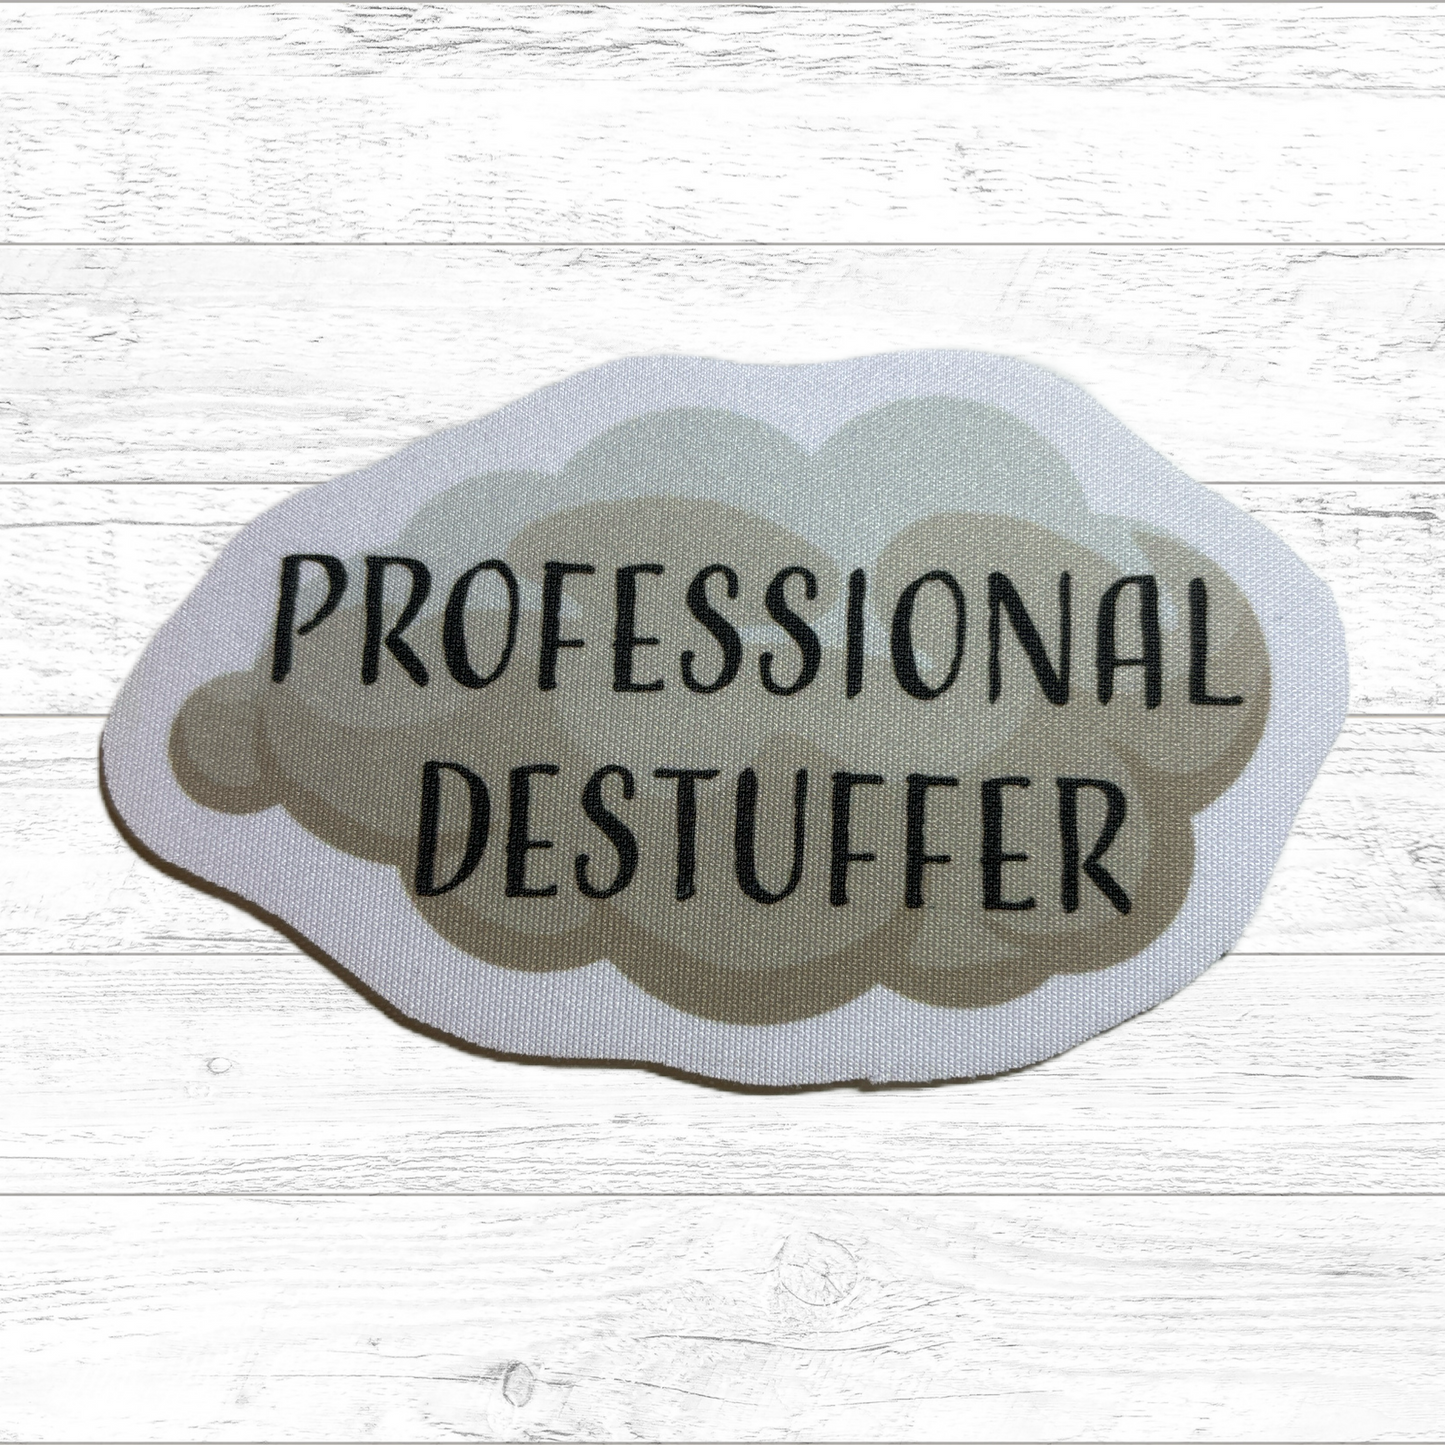 Professional Destuffer - Sublimated Neoprene Patch